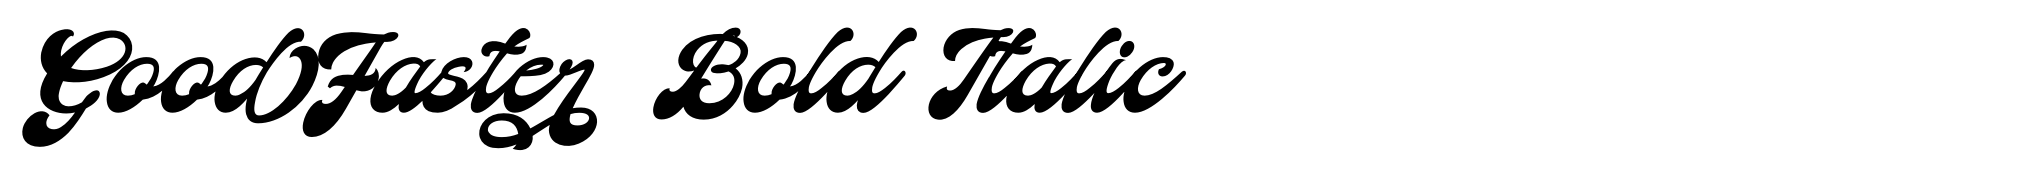 Good Faster Bold Italic image